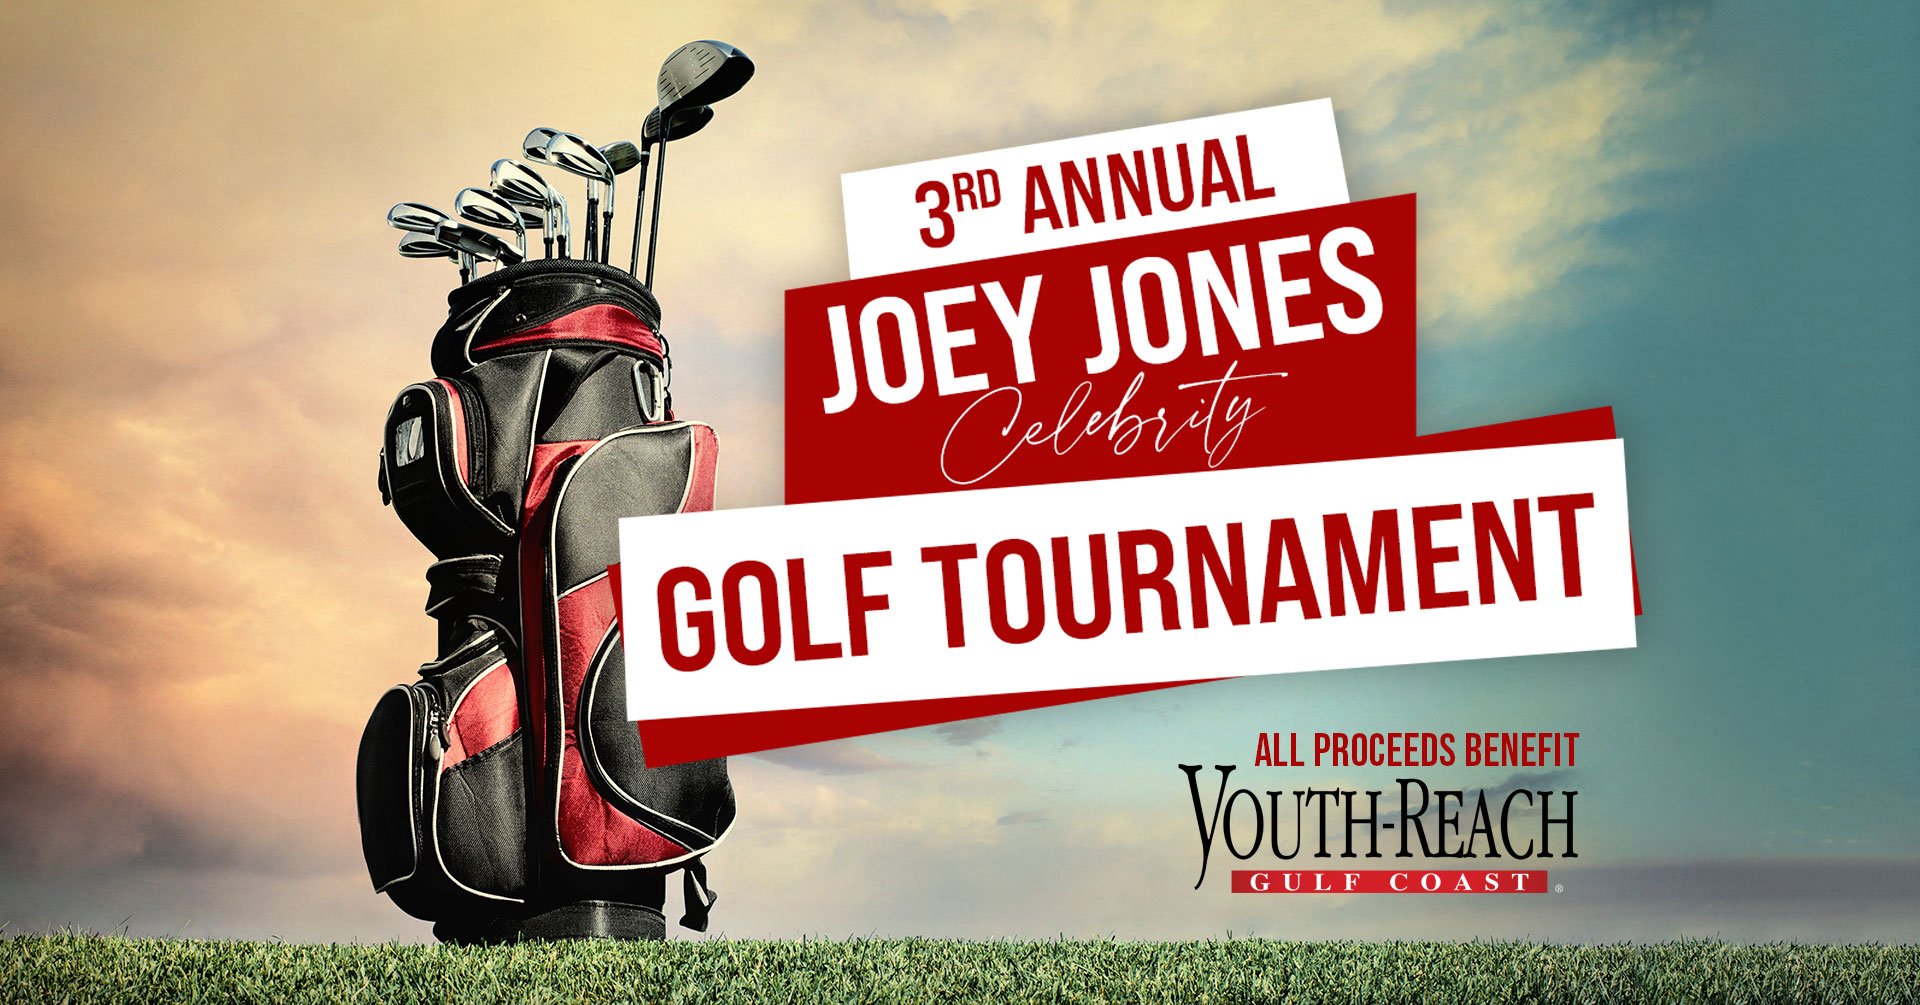 3rd Annual Joey Jones Celebrity Golf Tournament